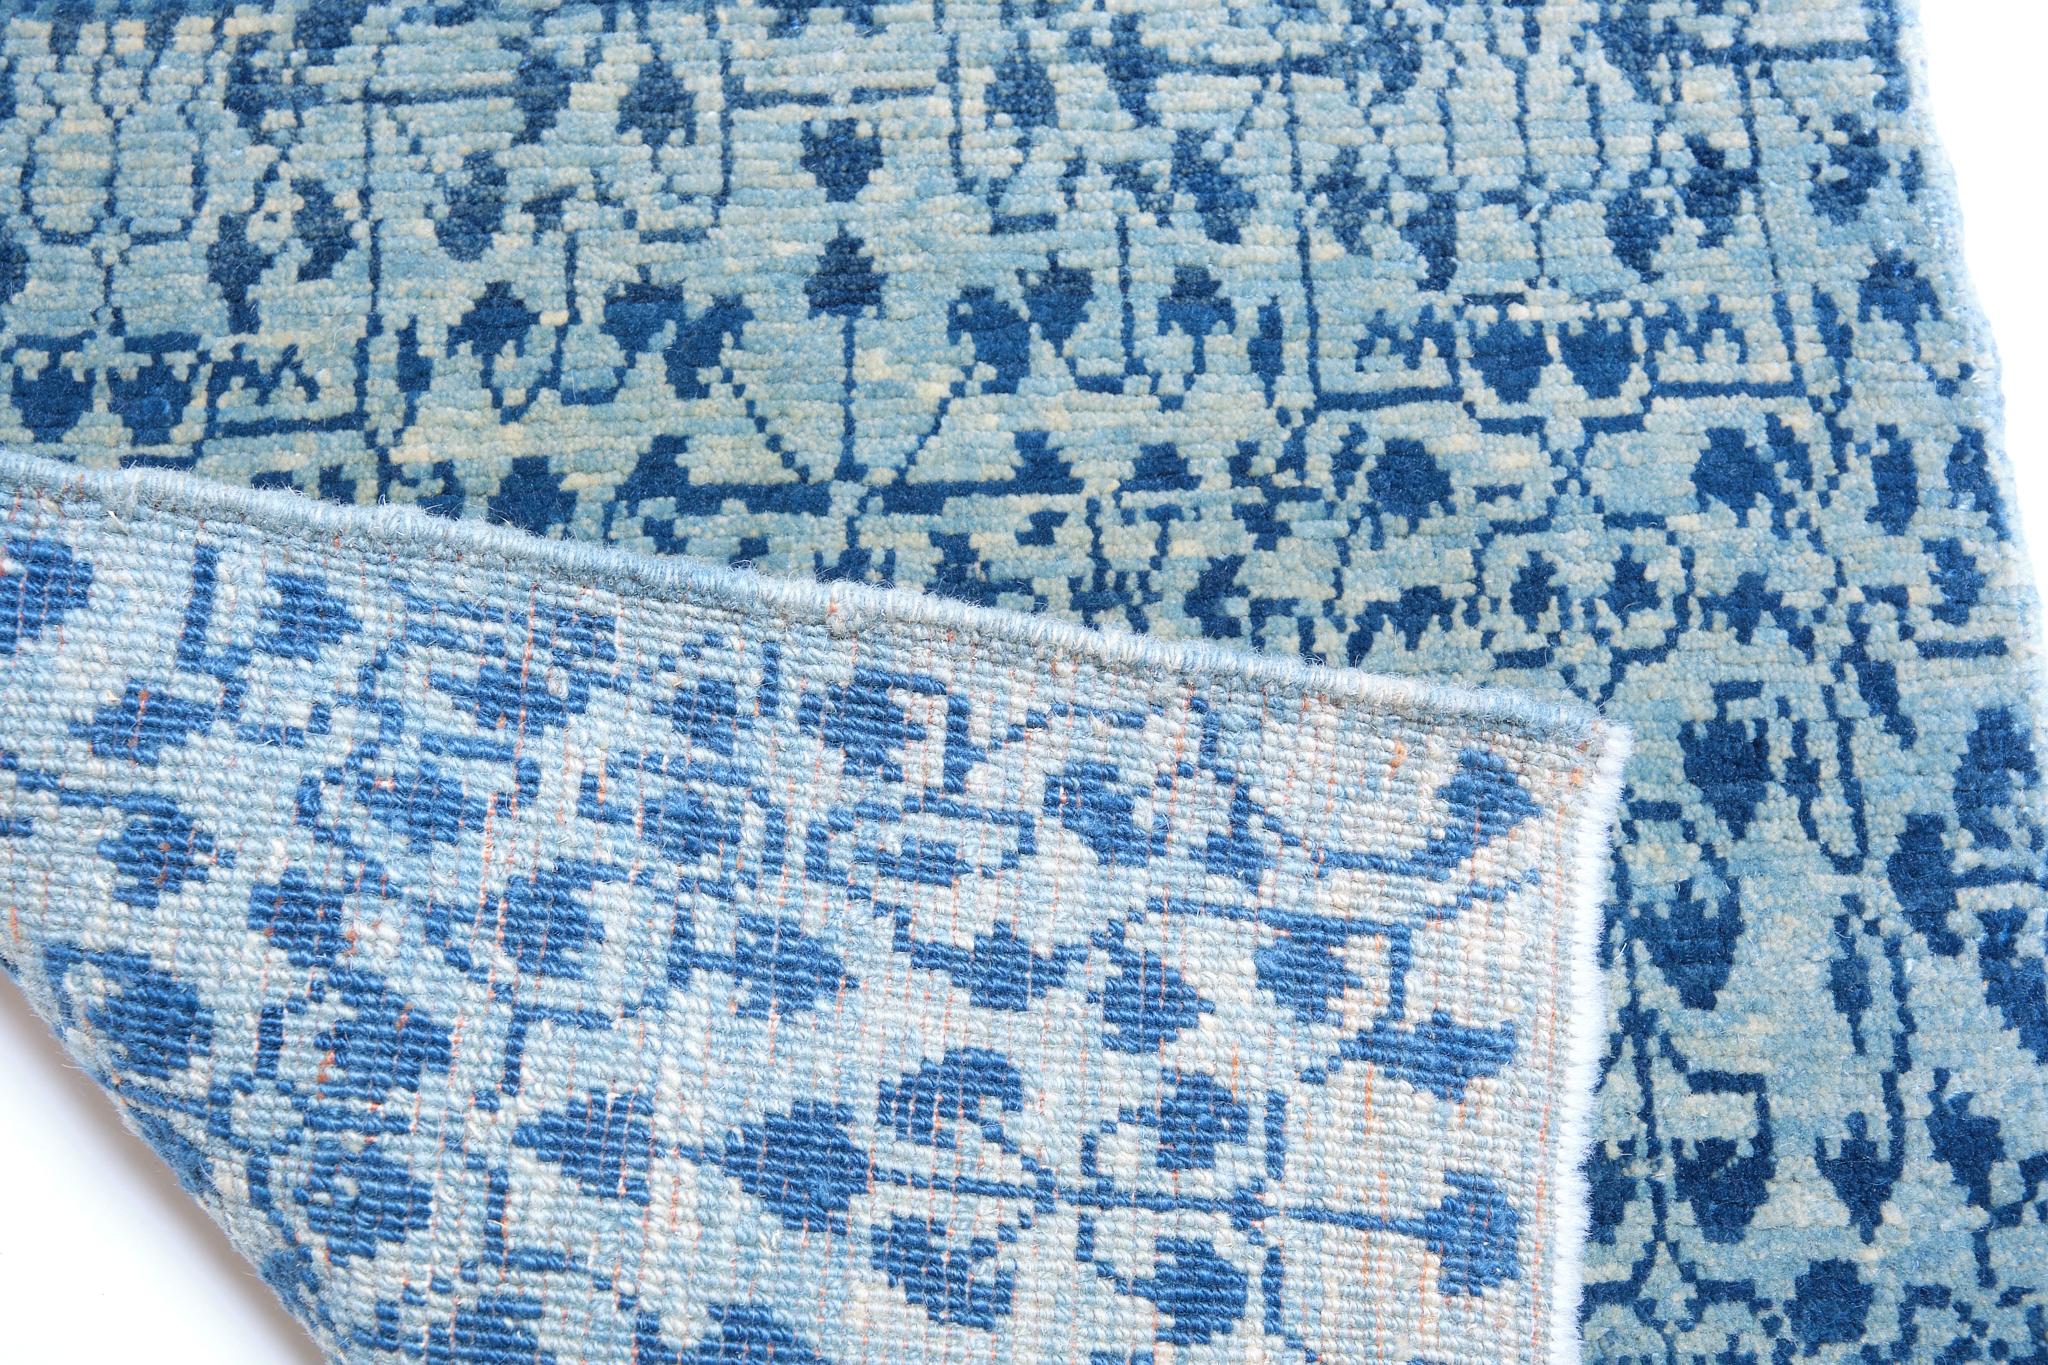 Vegetable Dyed Ararat Rugs Mamluk Wagireh Rug with Leaf Lattice Design, Egypt Revival Carpet For Sale